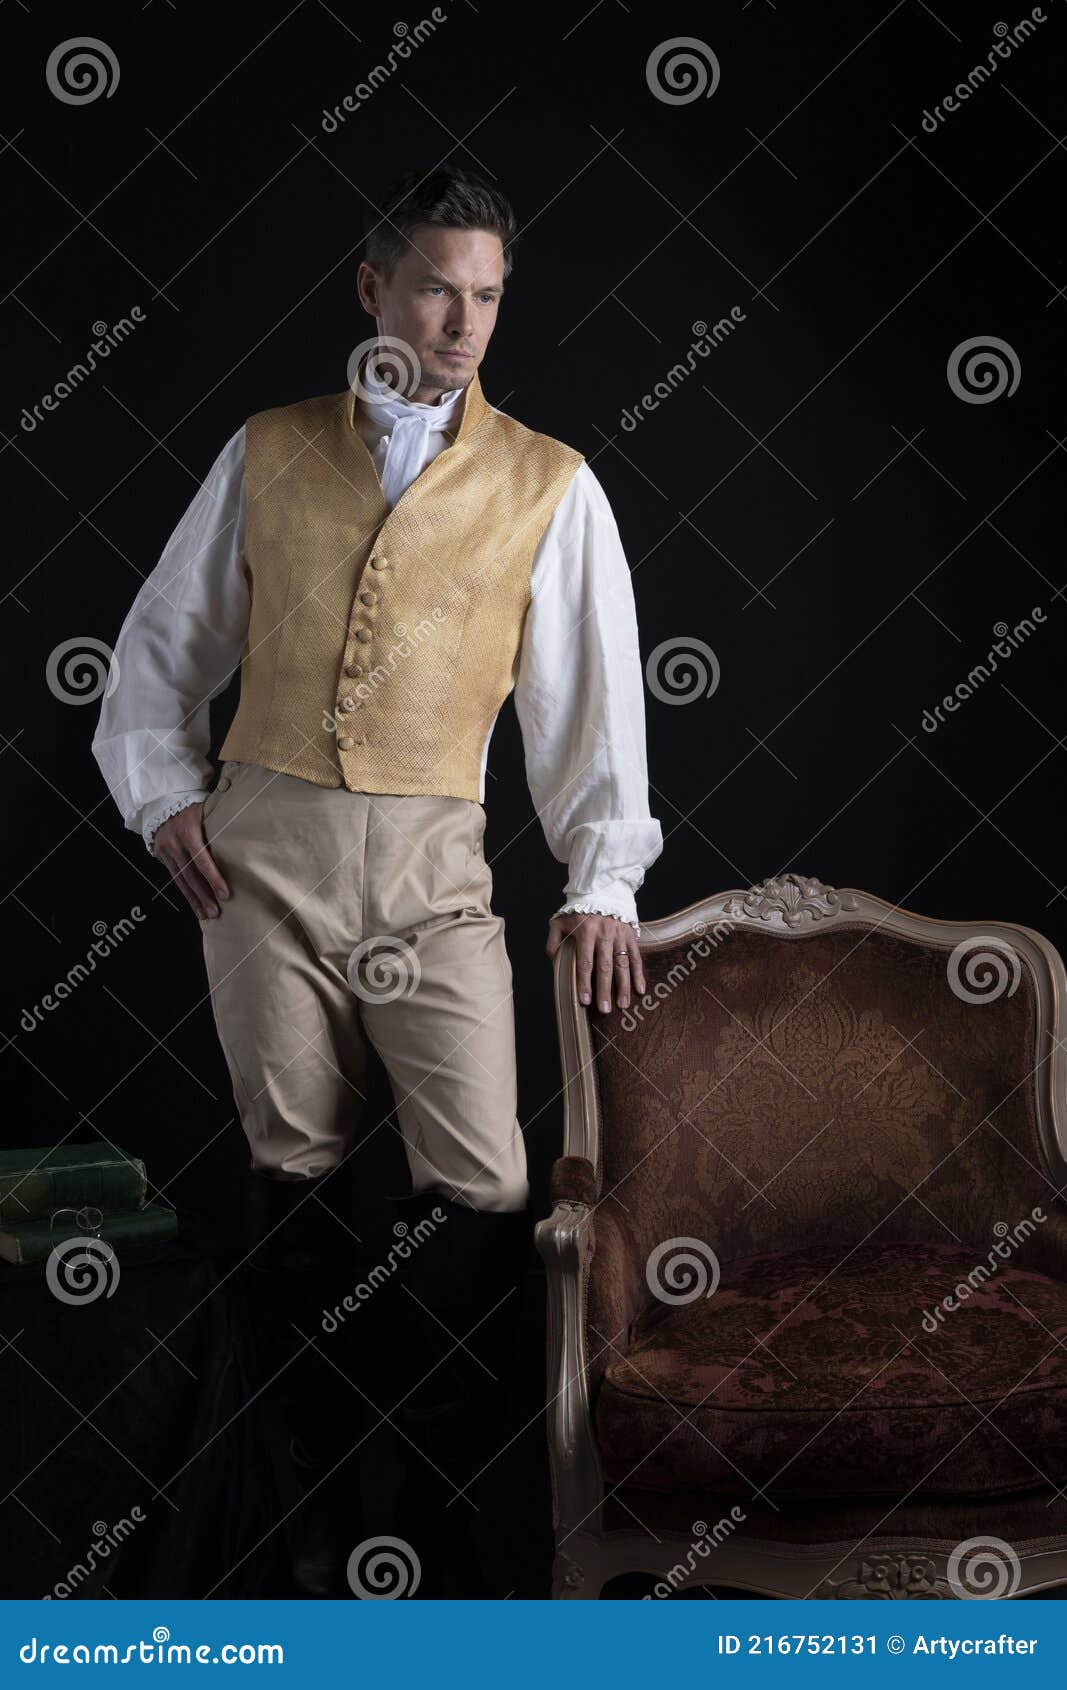 A Handsome Regency Gentleman Wearing a Gold Waistcoat Stock Image ...